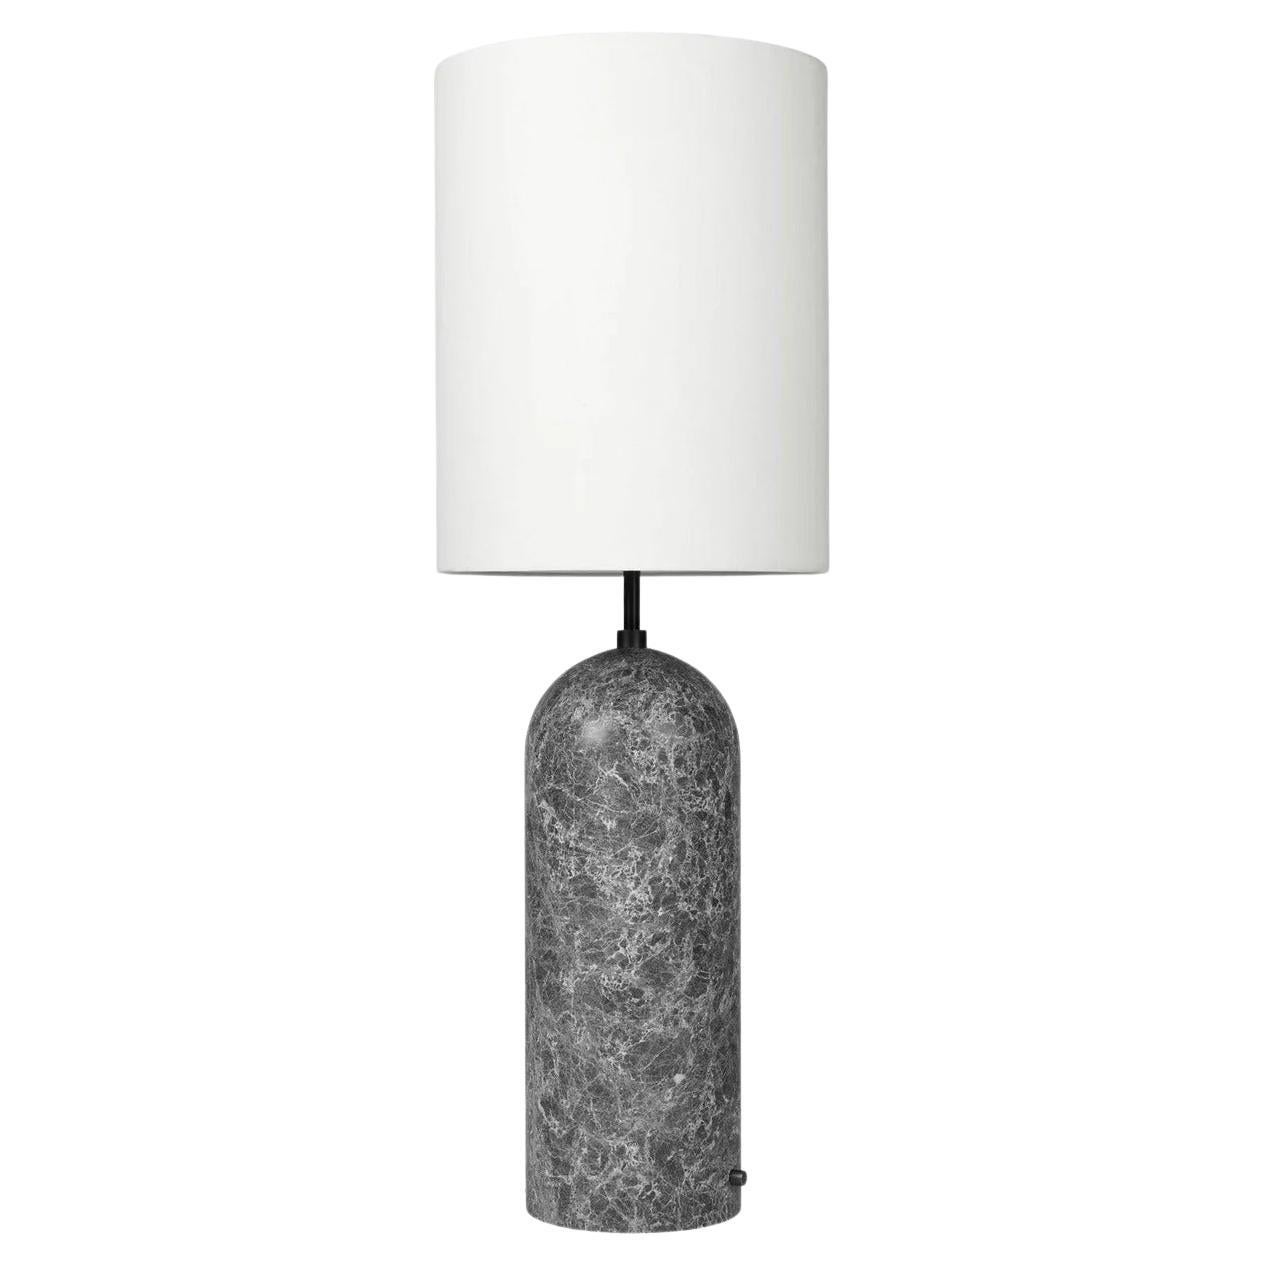 Gravity Floor Lamp - XL High, Grey Marble, White